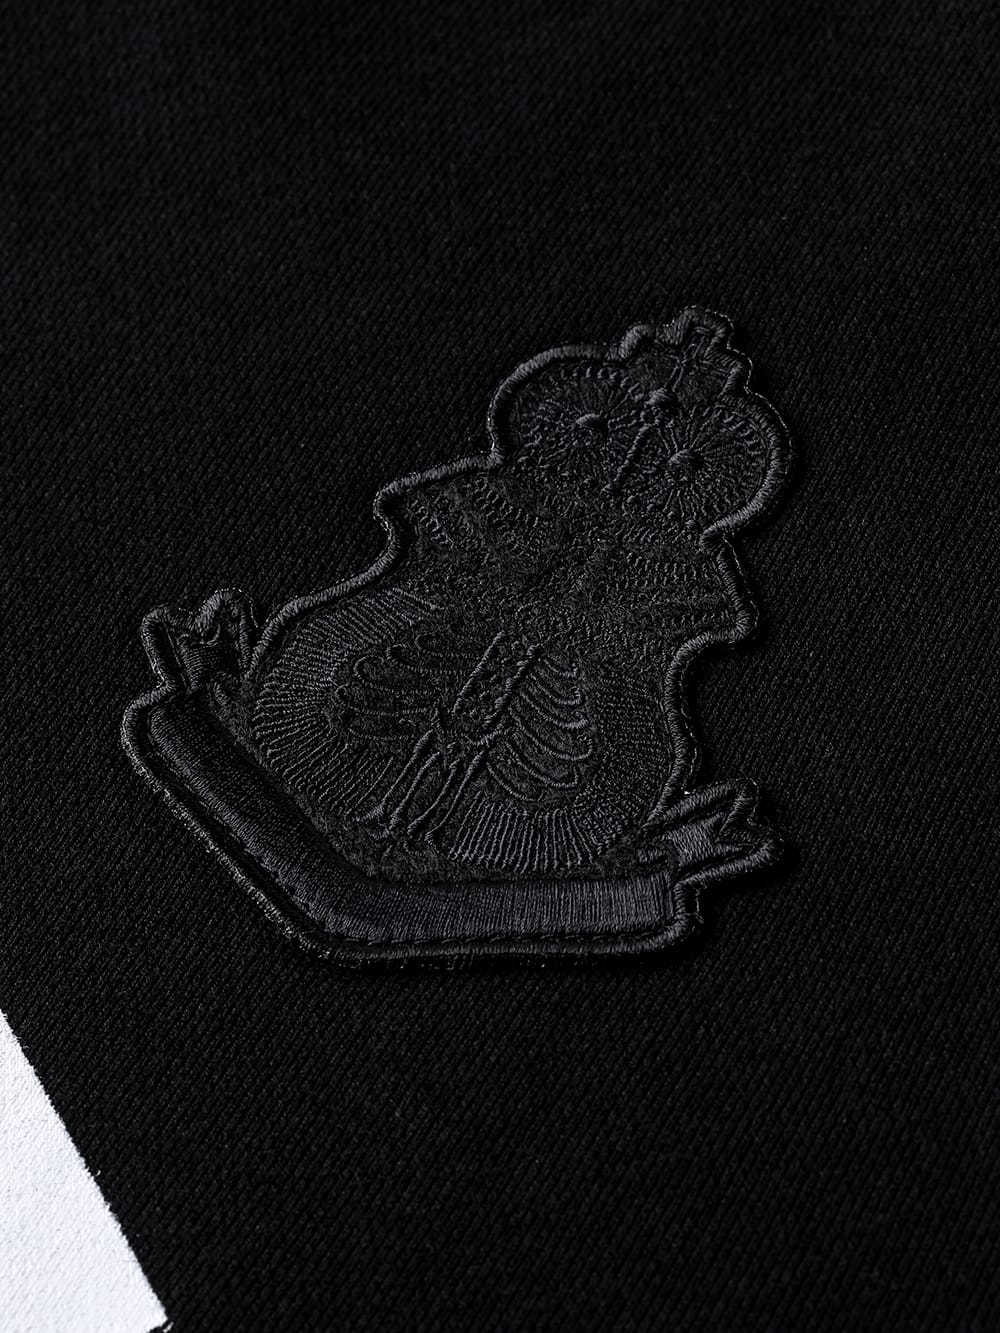 S logo and bone emblem. (crew neck sweatshirt)